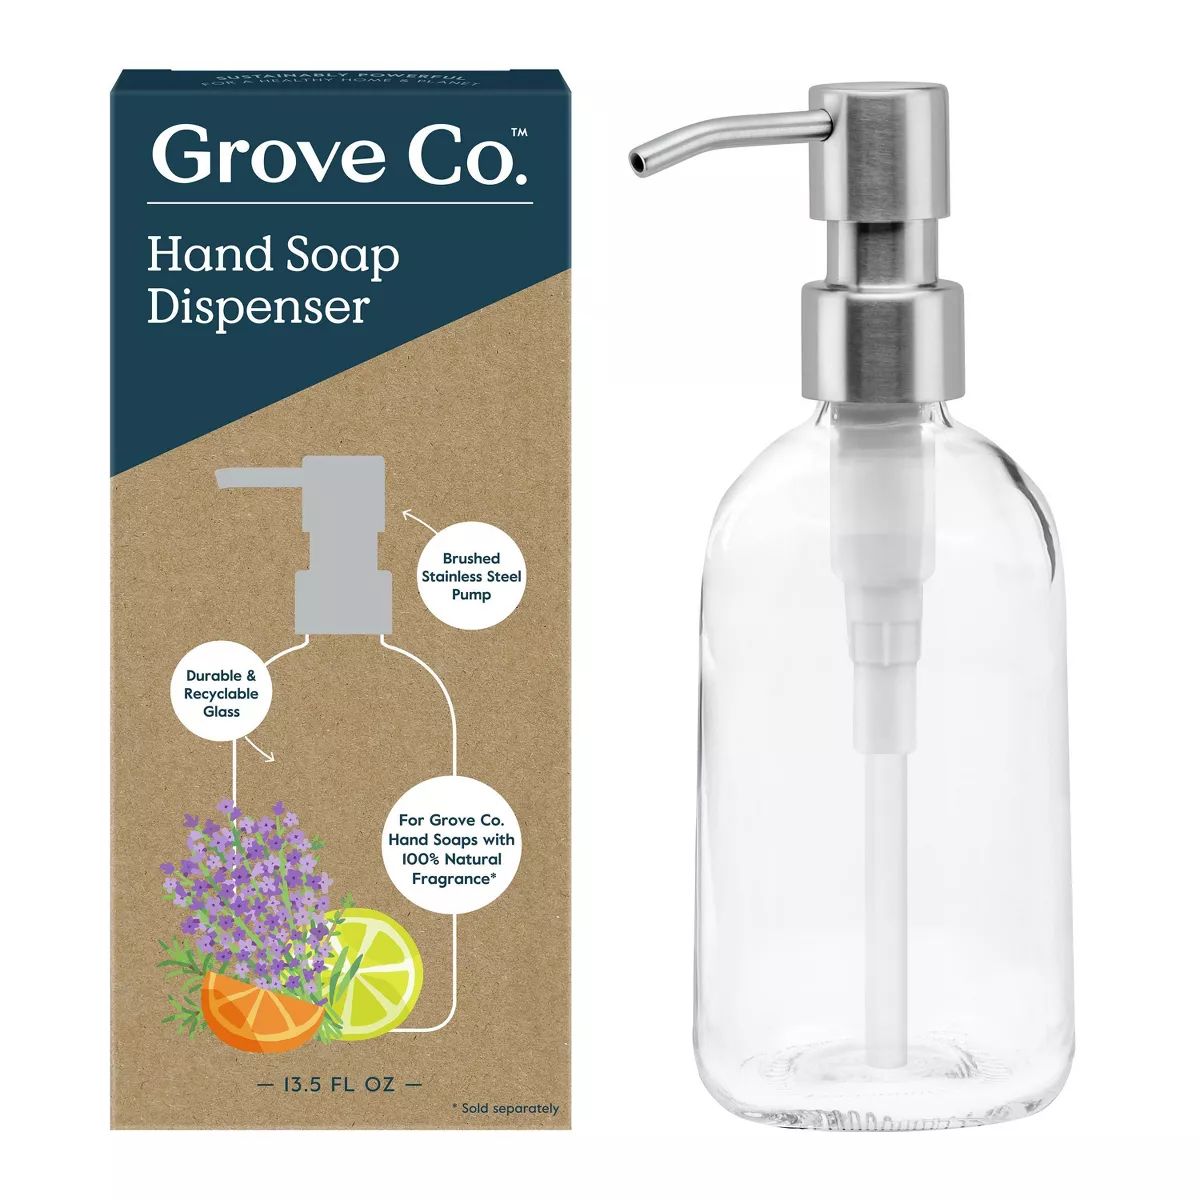 Grove Co. Hand Soap Glass Dispenser | Target